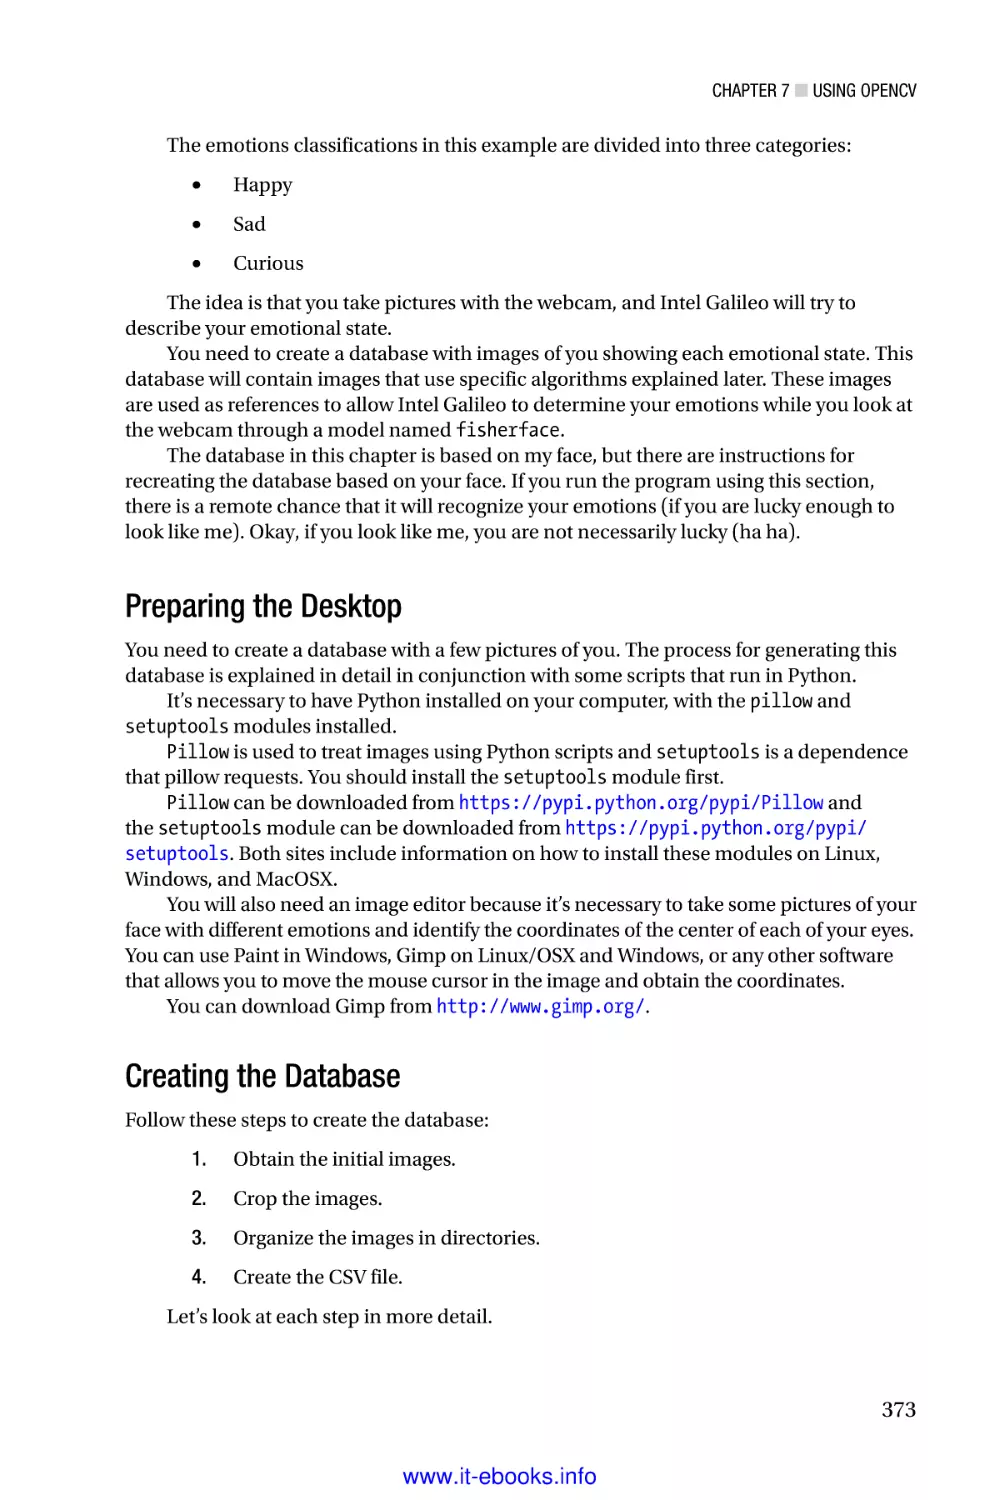 Preparing the Desktop
Creating the Database